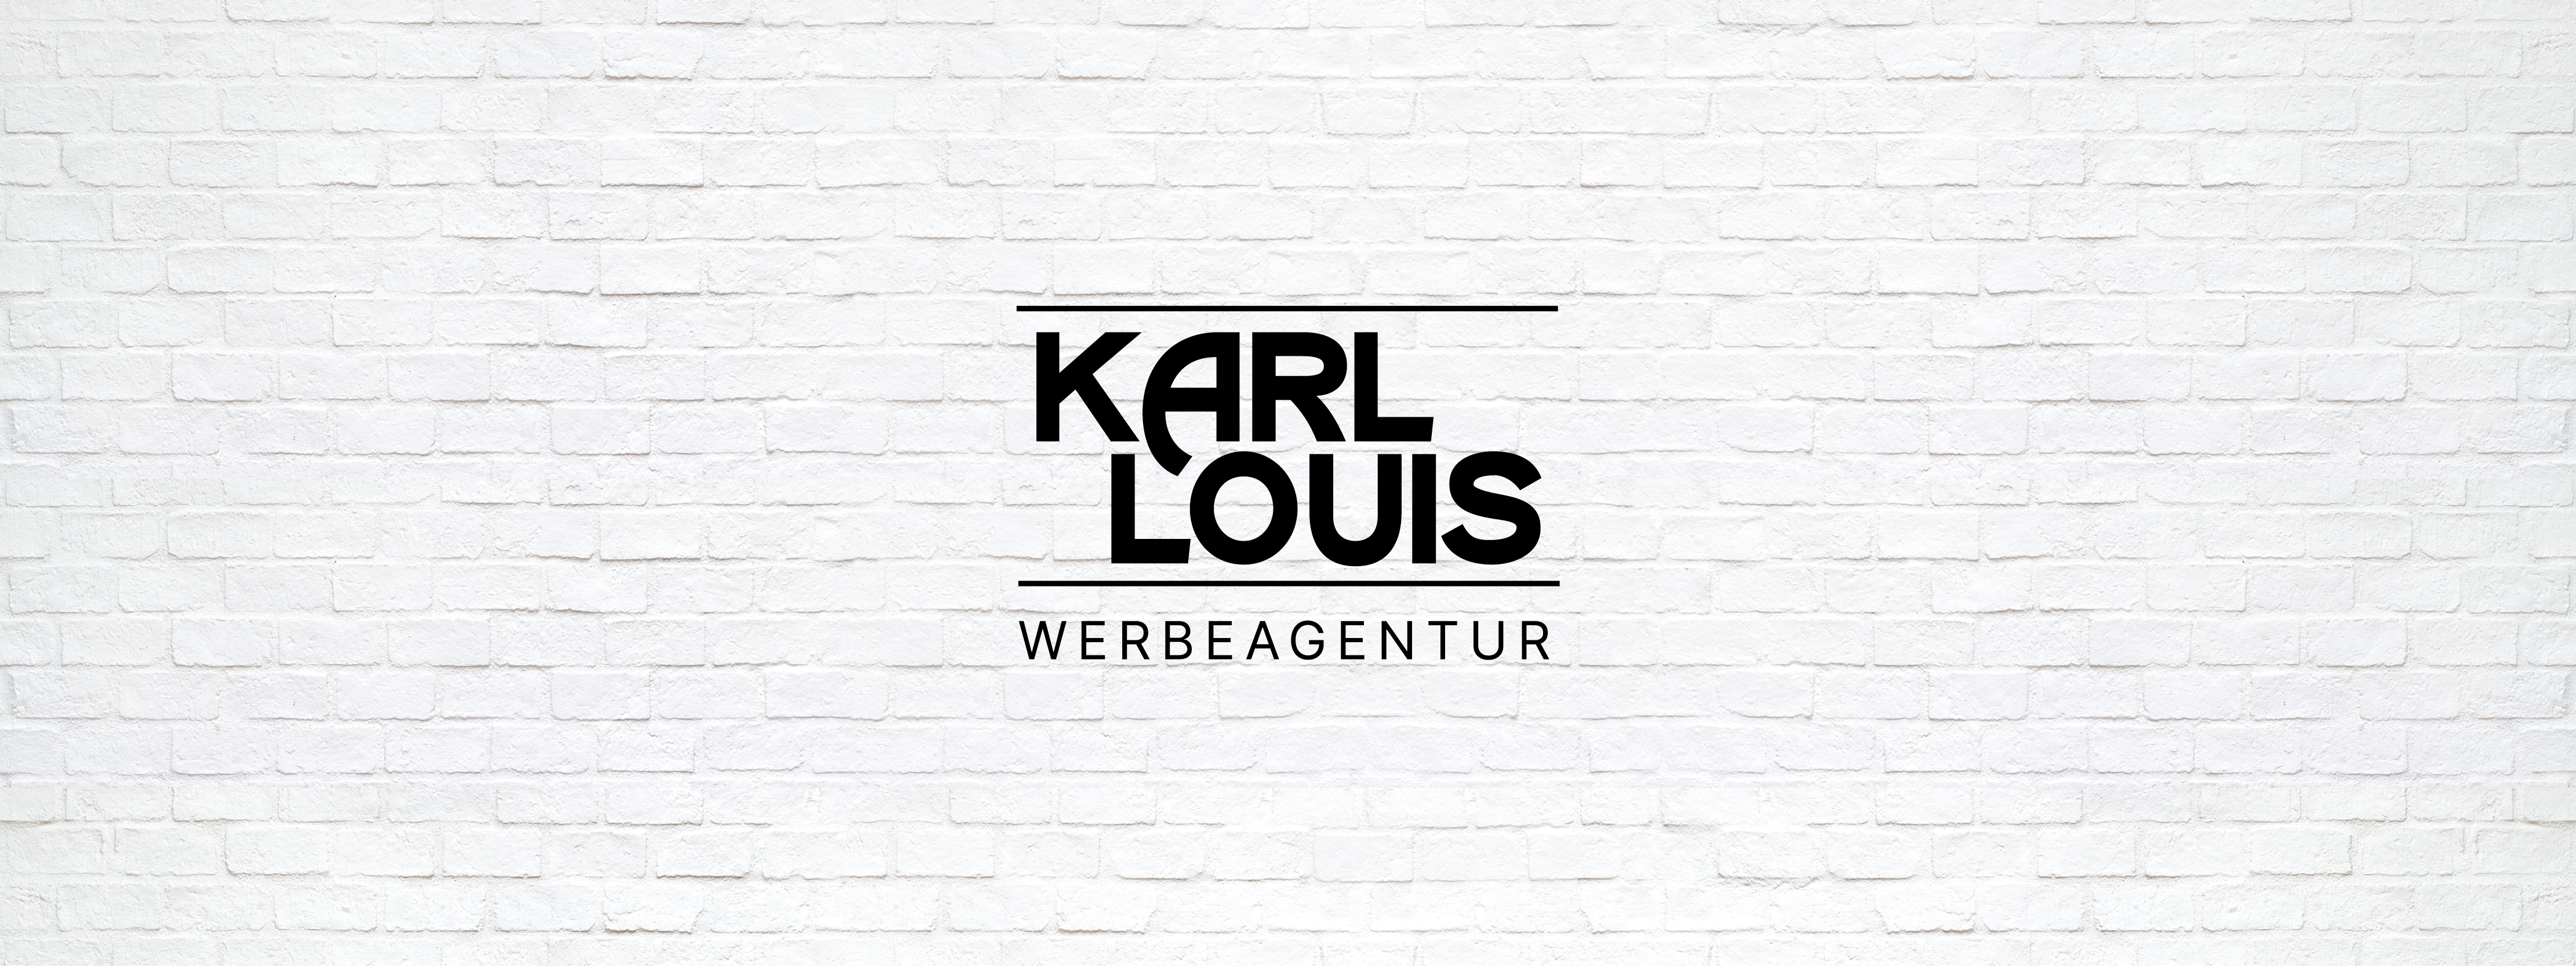 Karl Louis, Werbeagentur